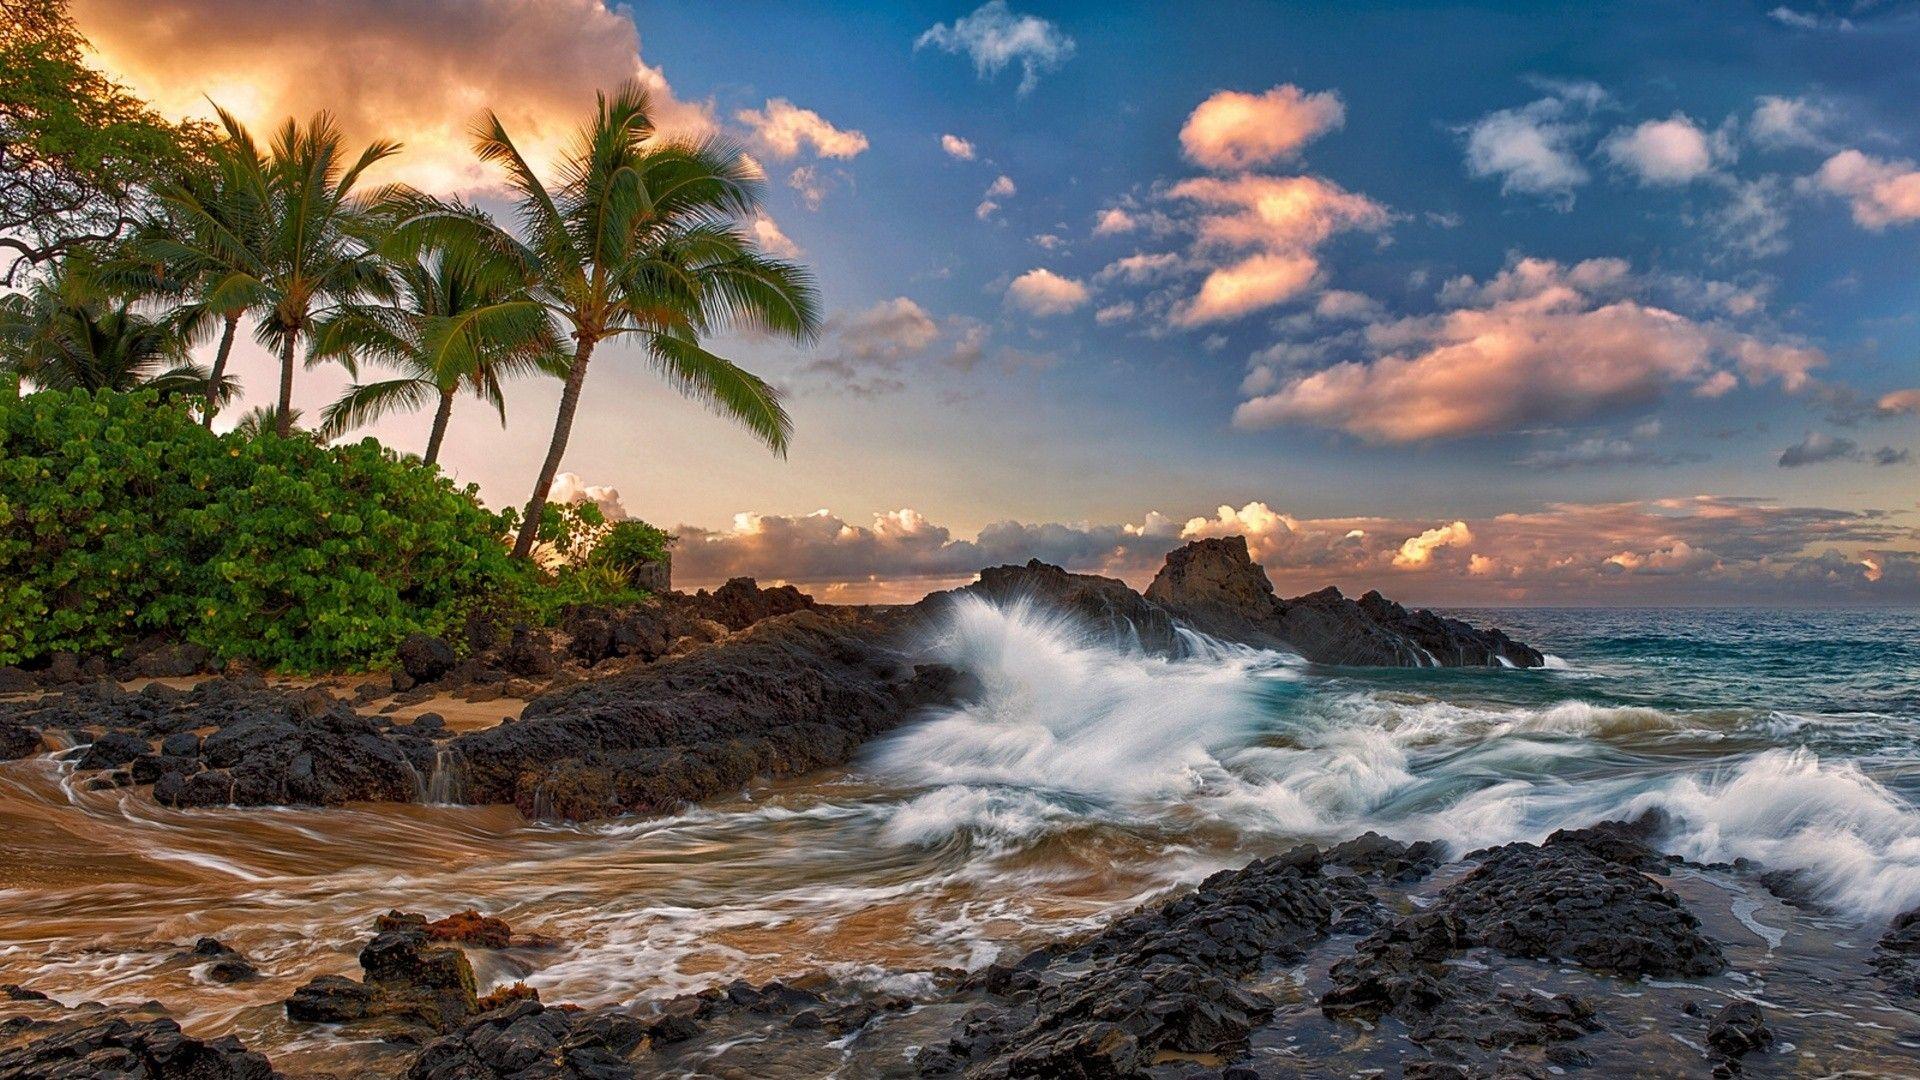 Beach and Sea Of Hawaii Wallpaper Luxury Black Rock